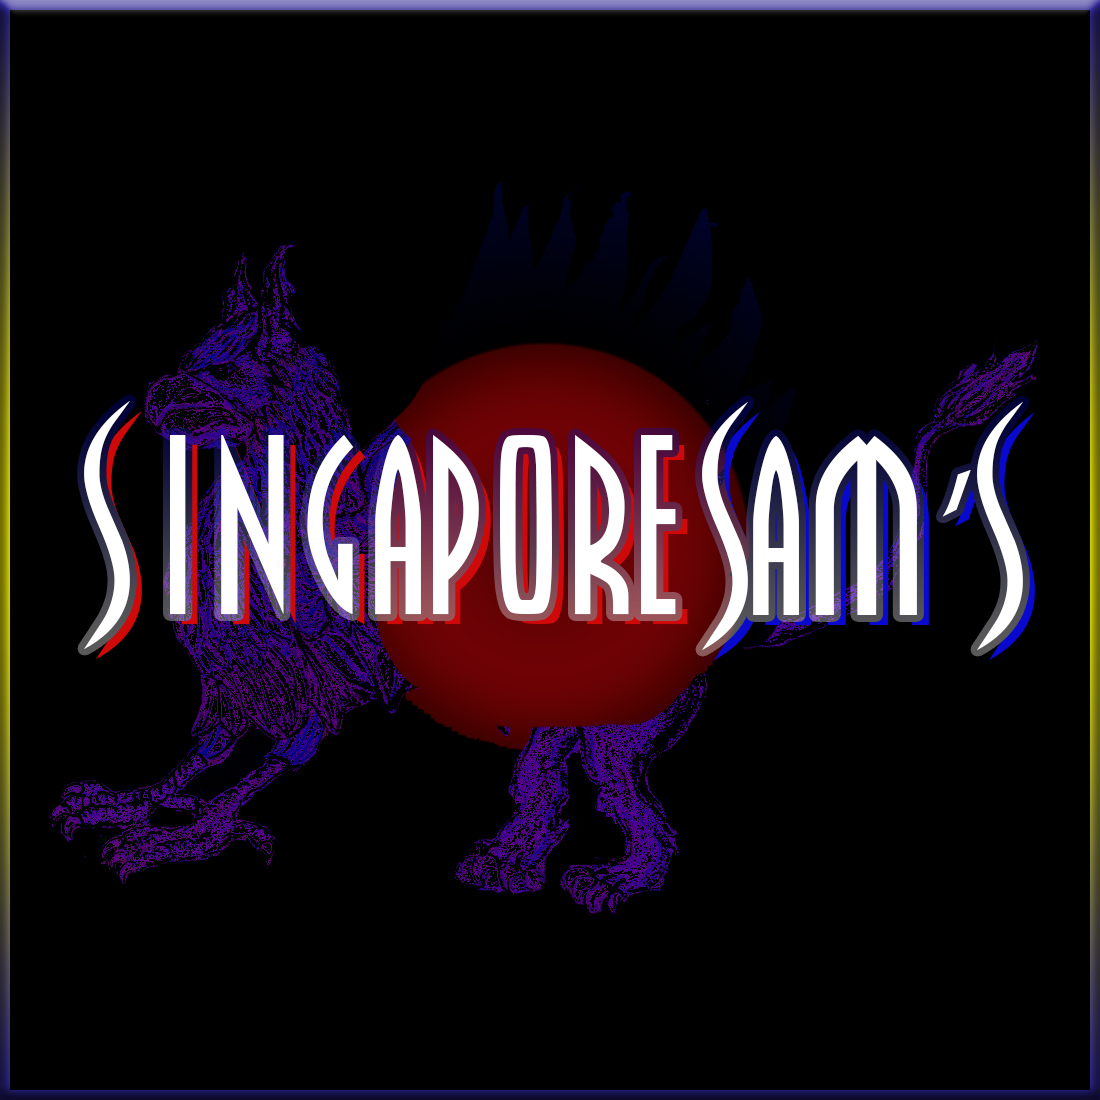 Singapore Sam's